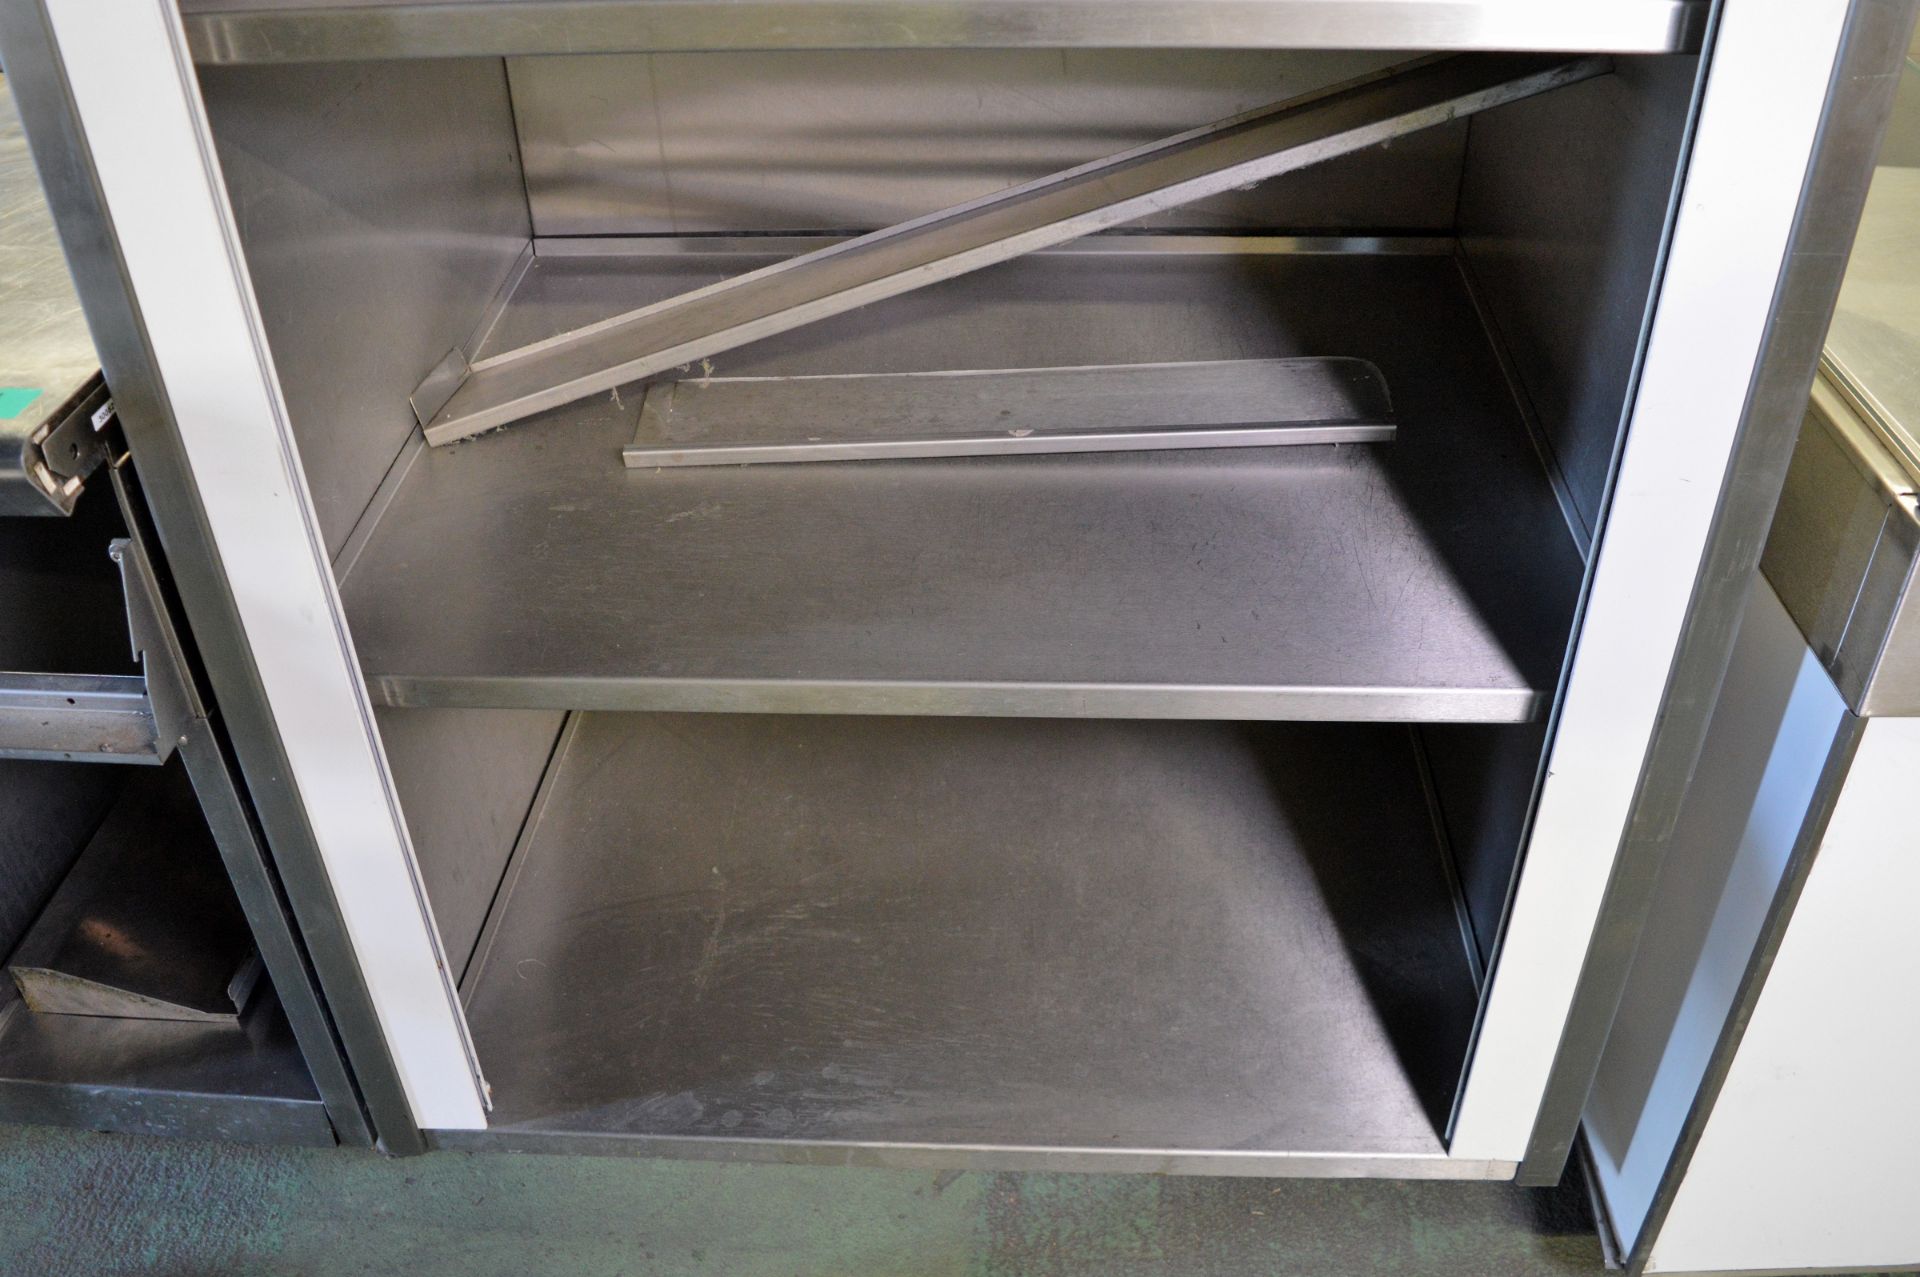 Stainless Steel 4-Shelf Roller Shutter Storage Cabinet (faulty shutter door) - 1000 x 750 - Image 2 of 3